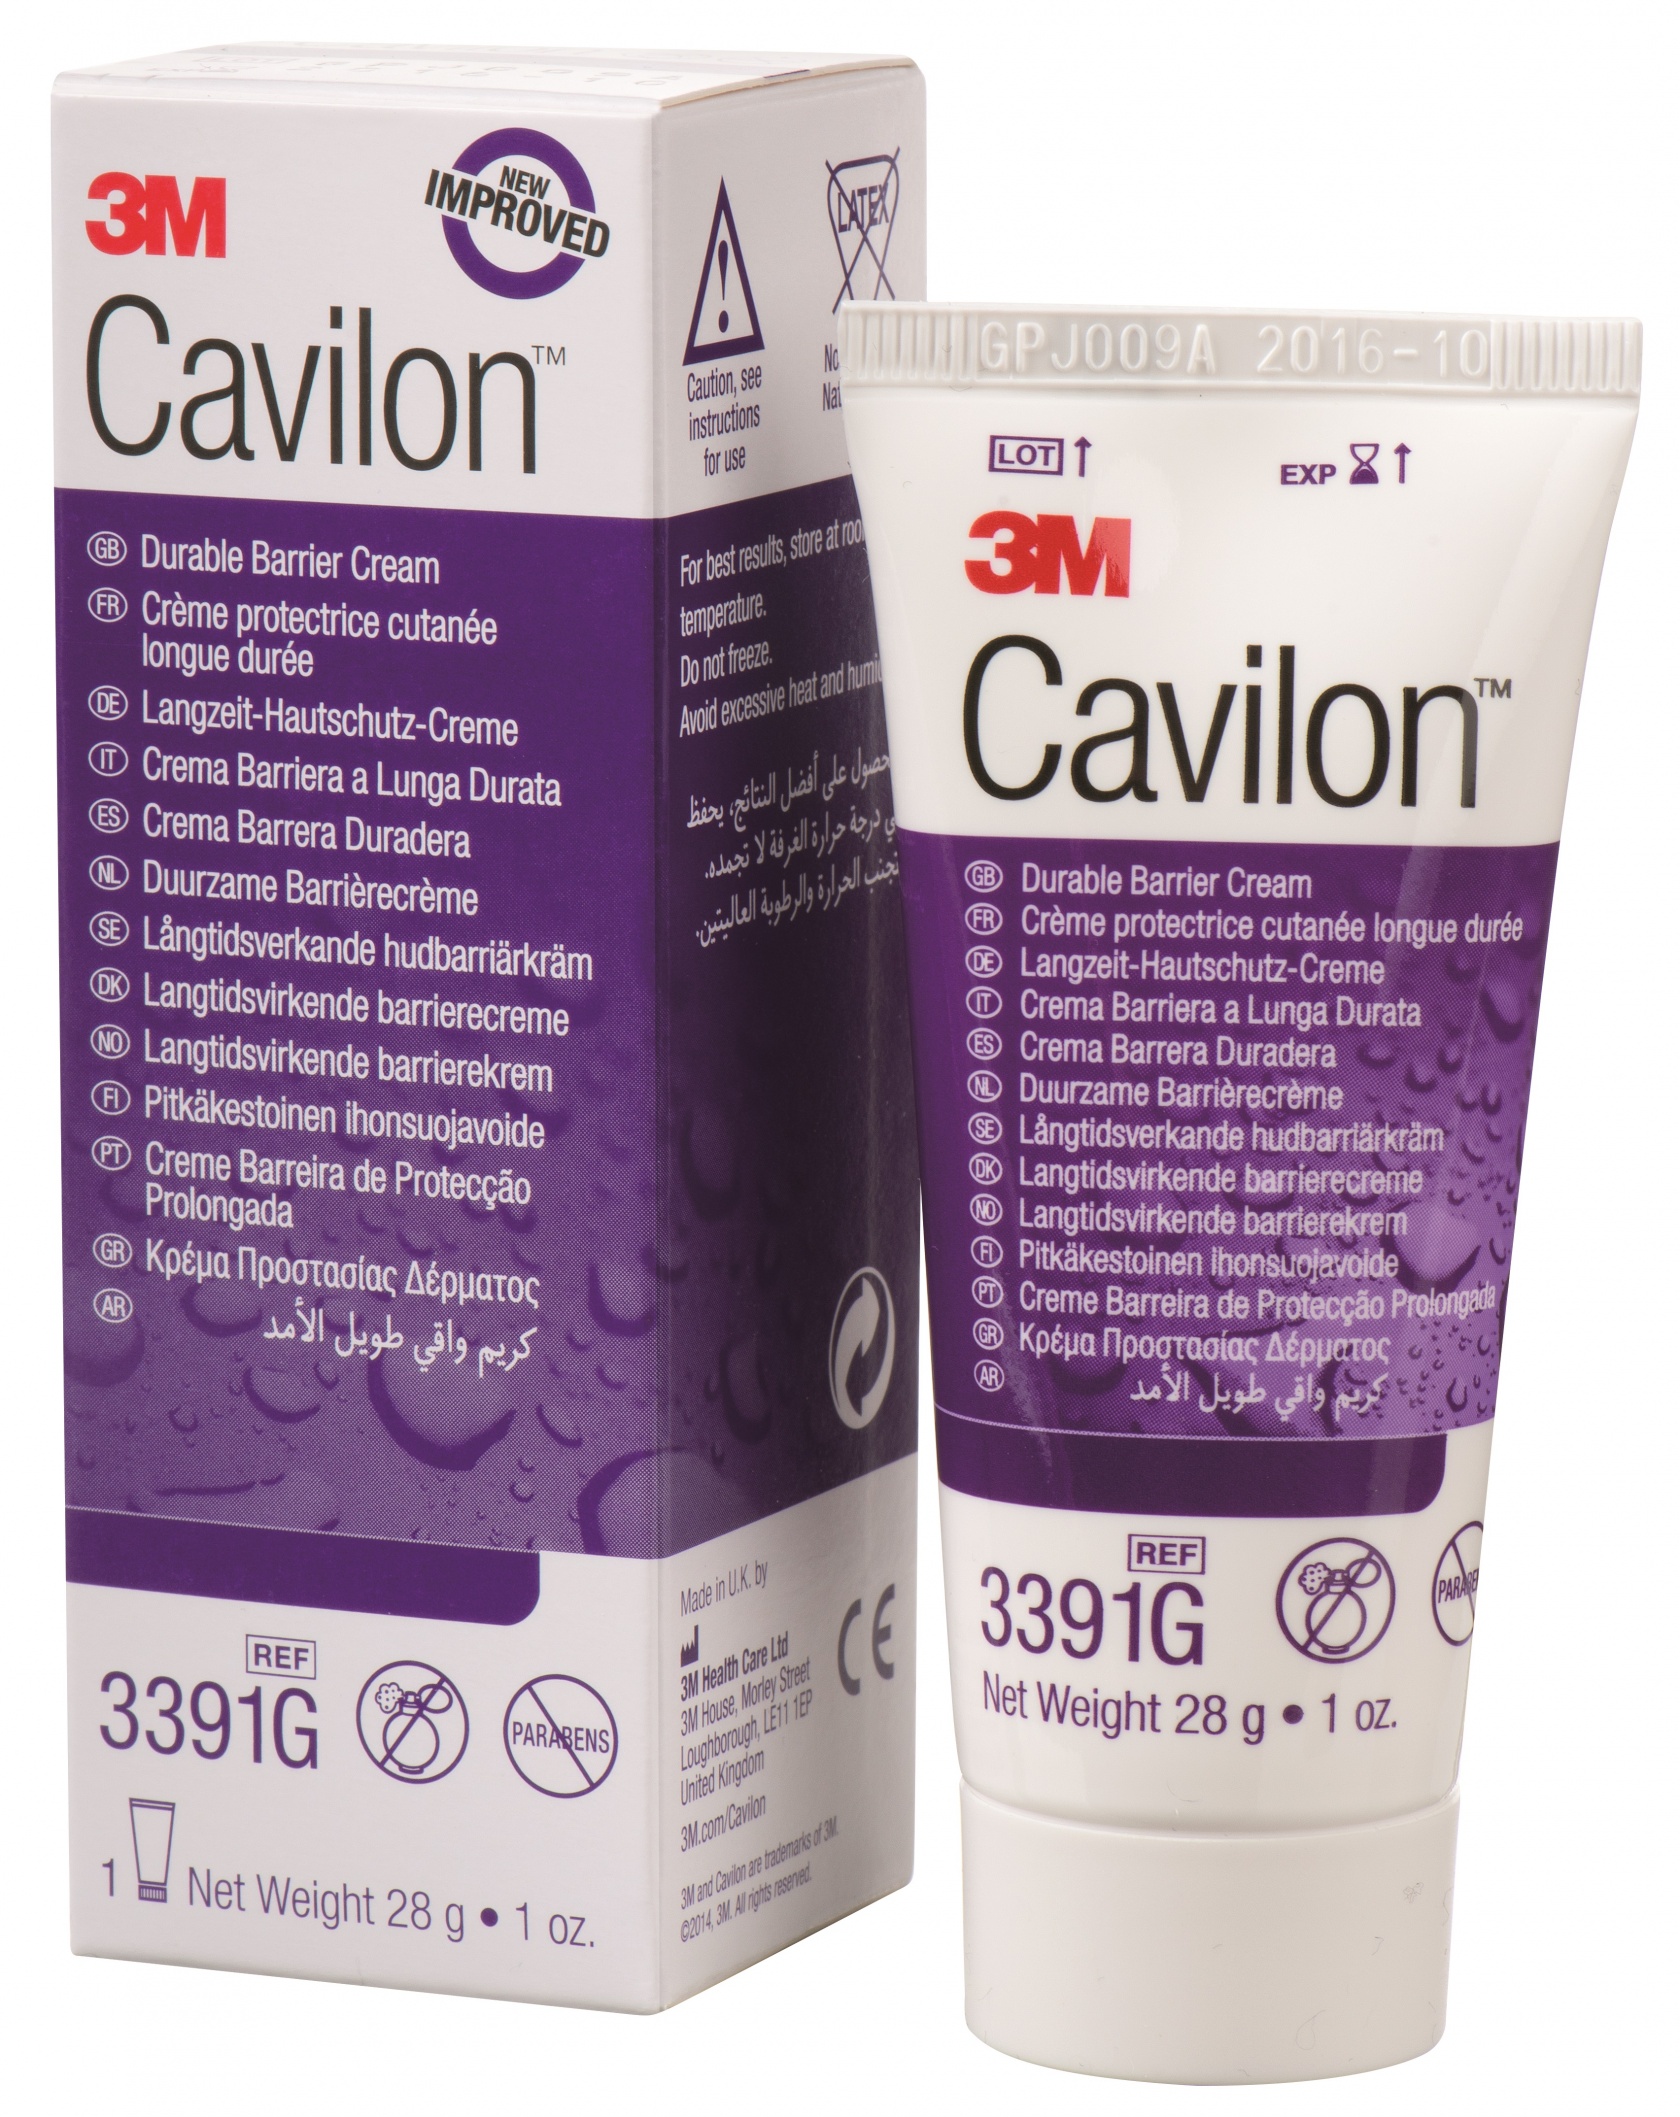 3M Cavilon Durable Barrier Cream 28g image 1